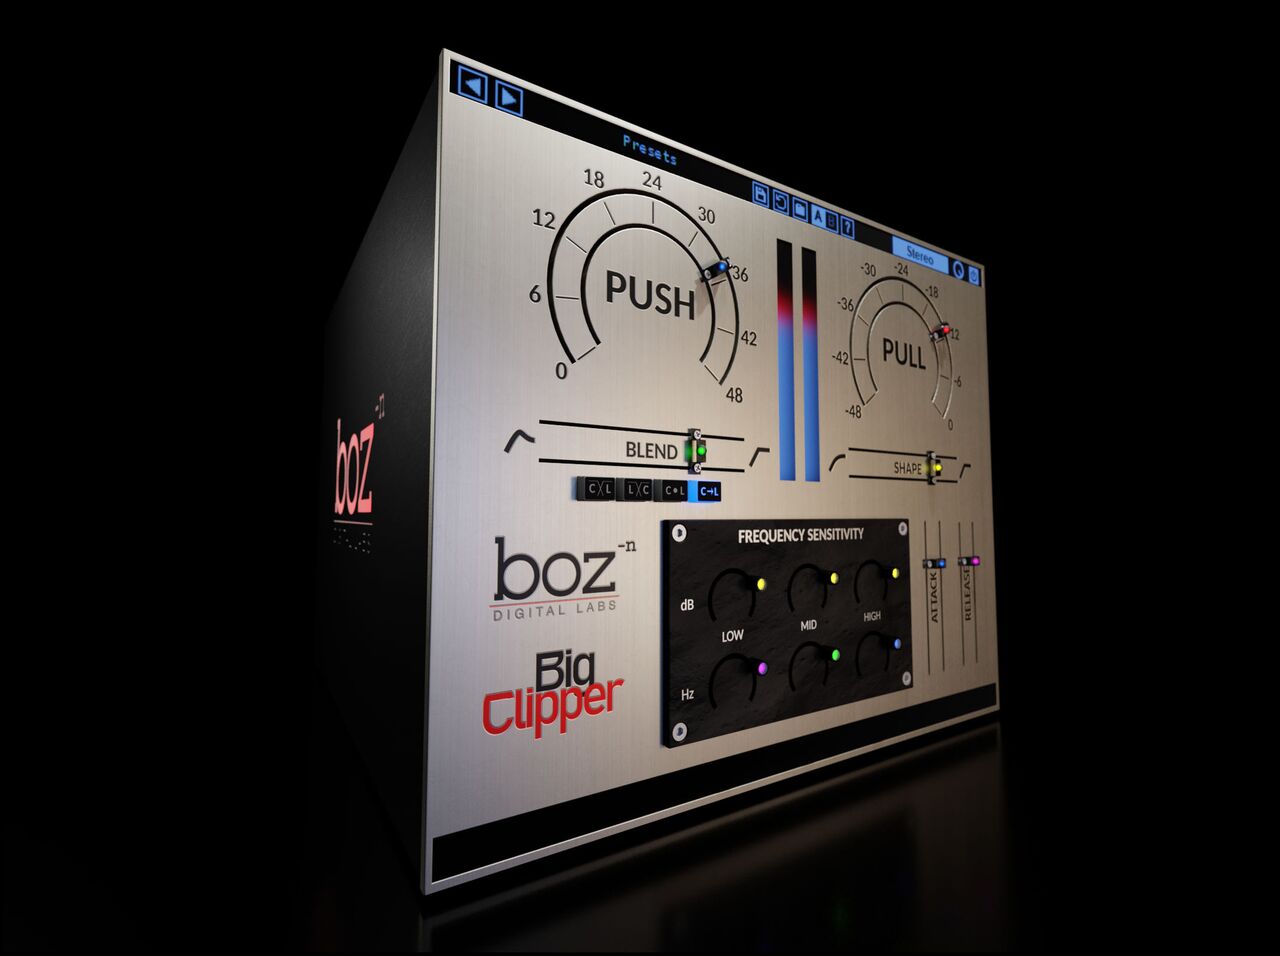 Big Clipper by Boz Digital Labs